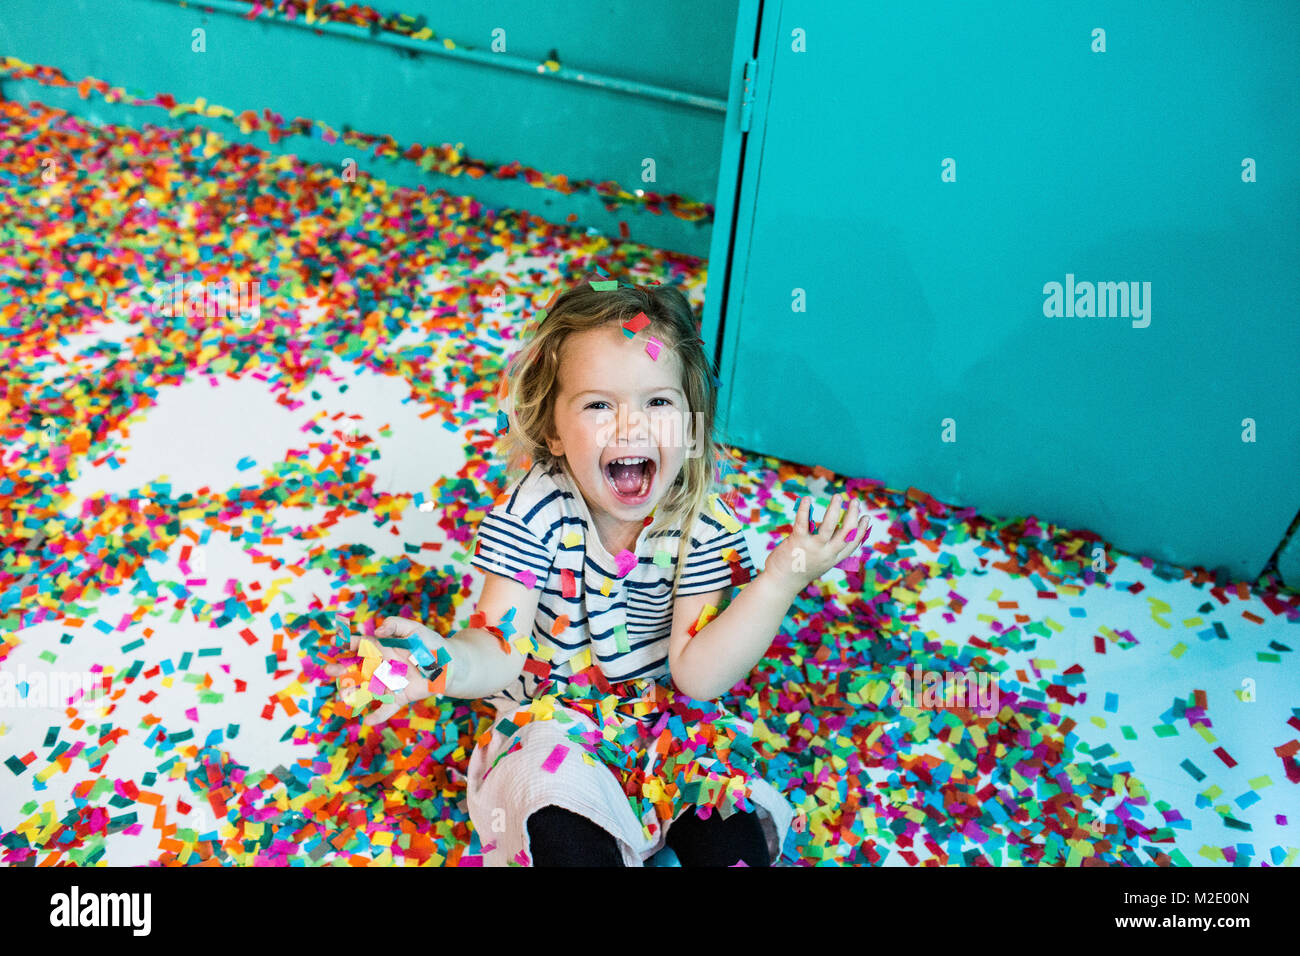 Colorful confetti falling on Caucasian girl Stock Photo